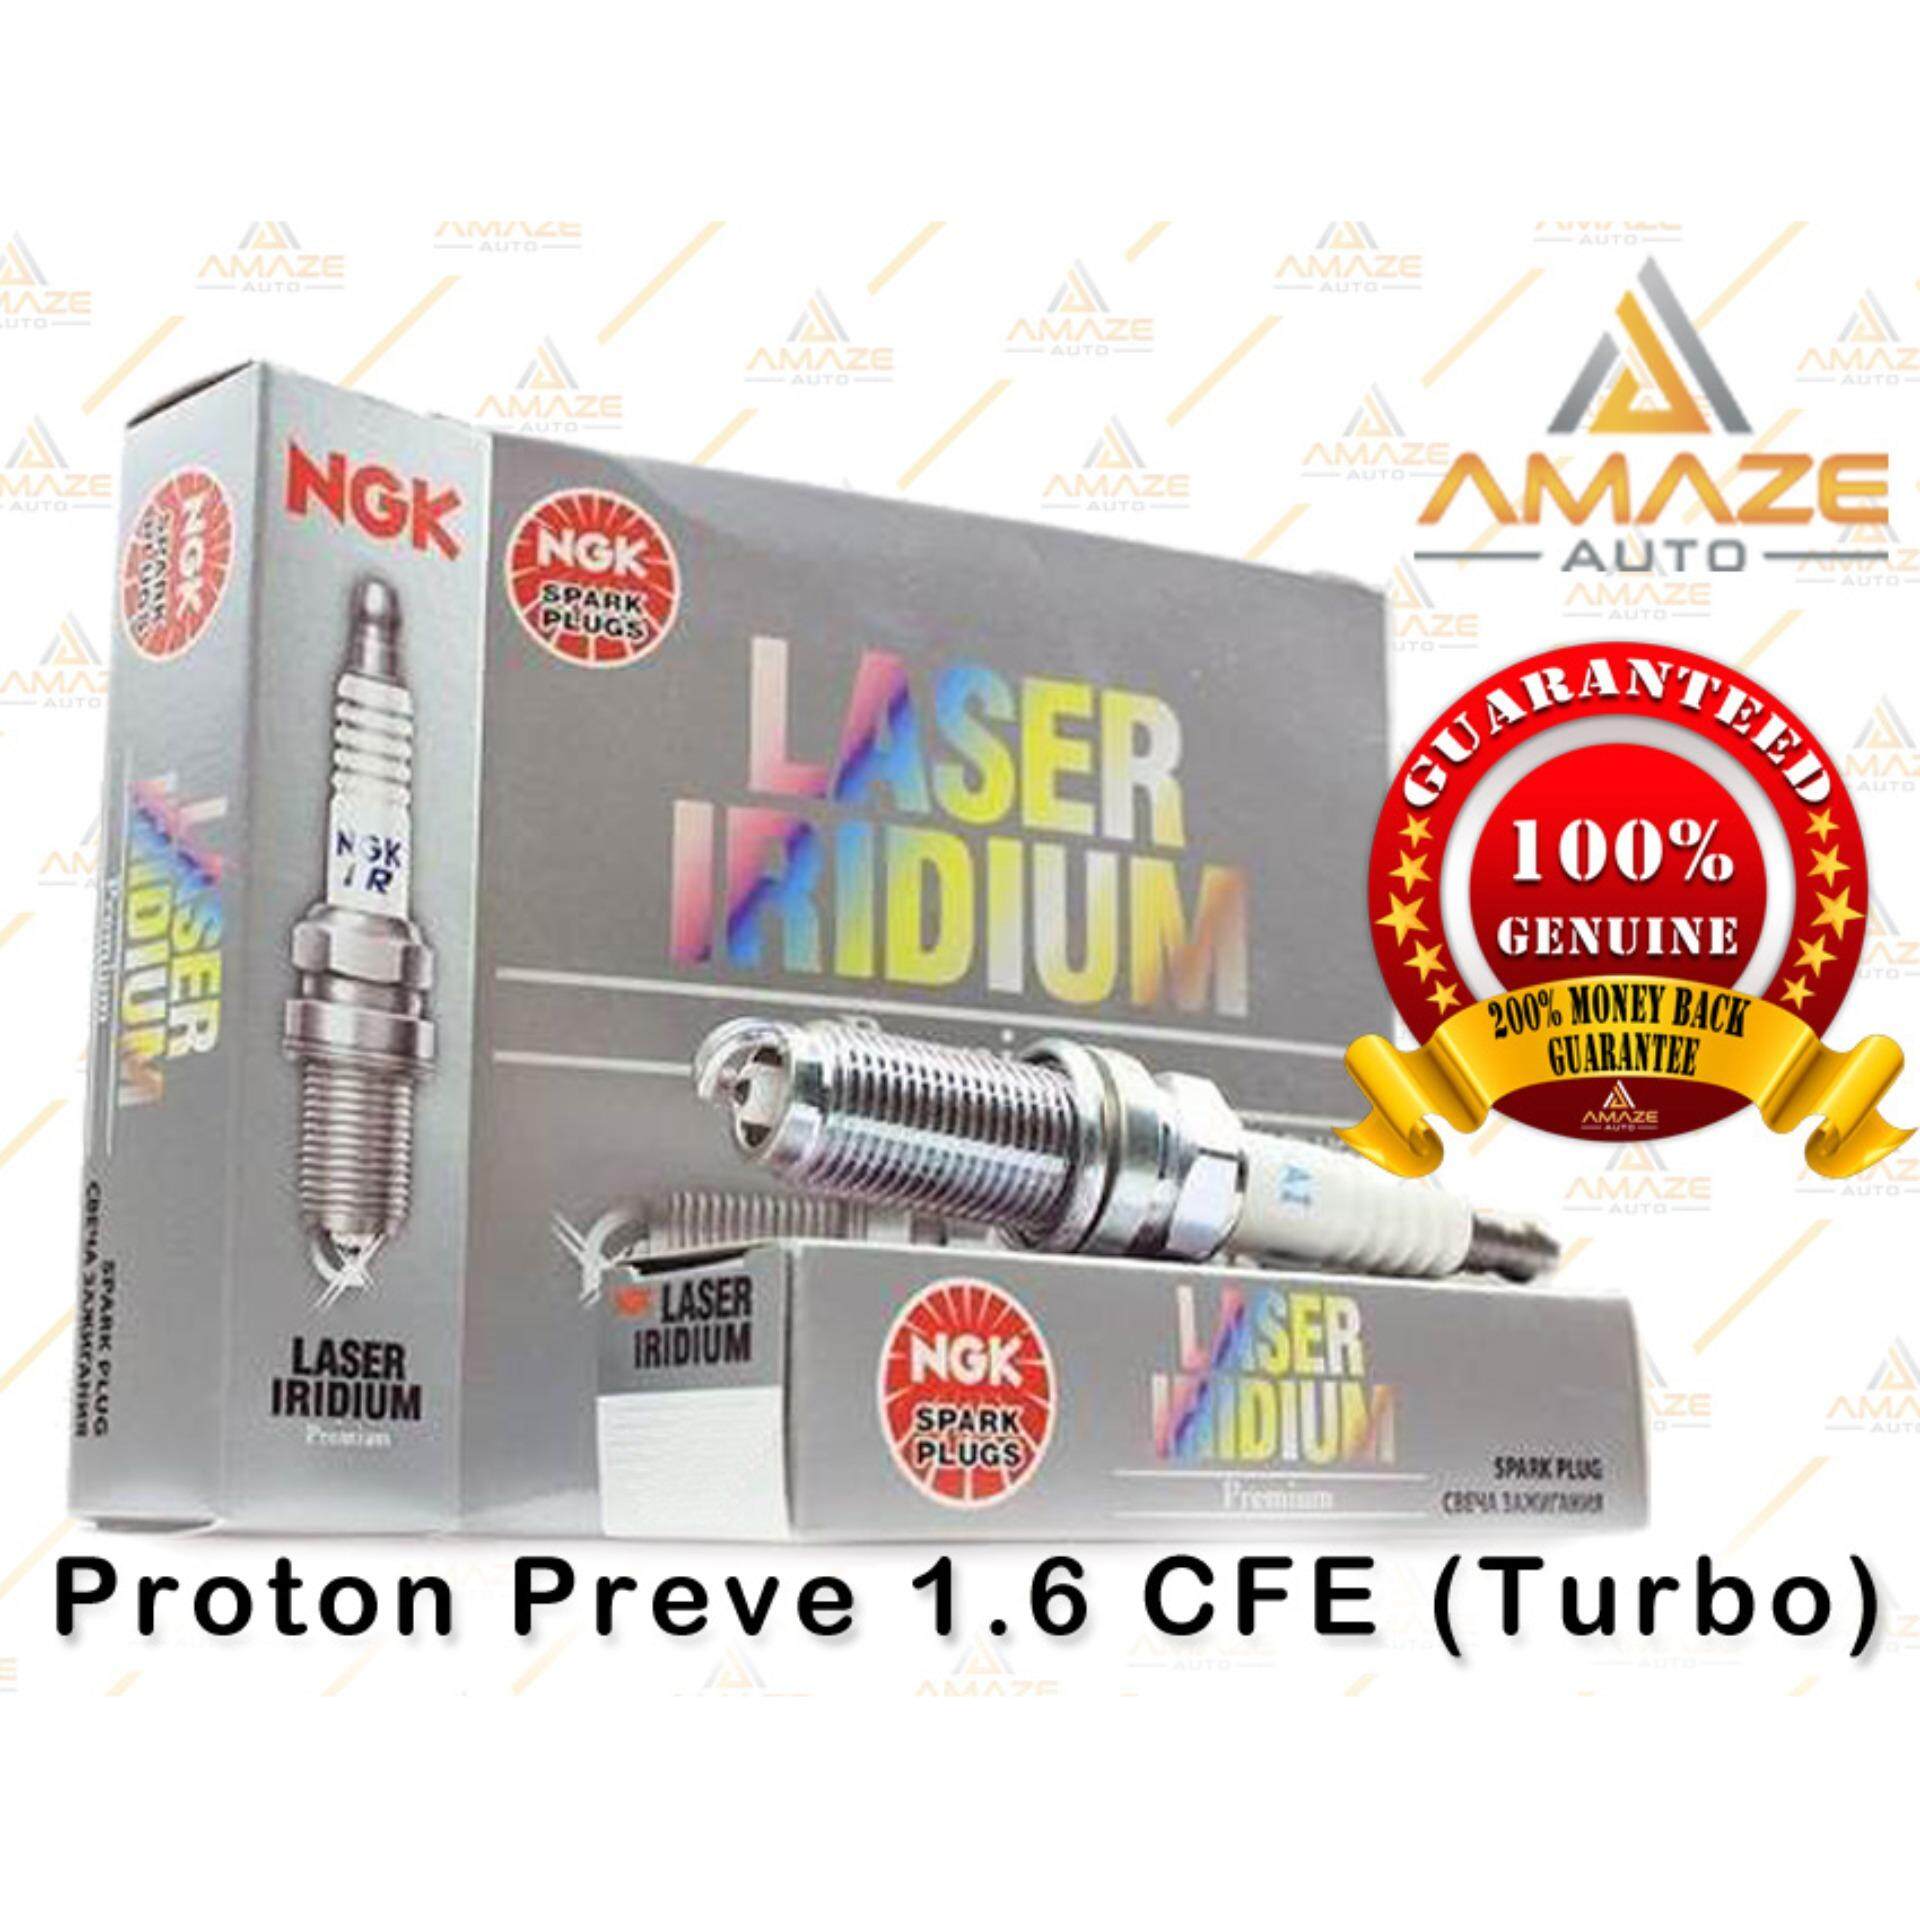 NGK Laser Iridium Spark Plug for Proton Preve 1.6 CFE (Turbo) - Amaze Autoparts